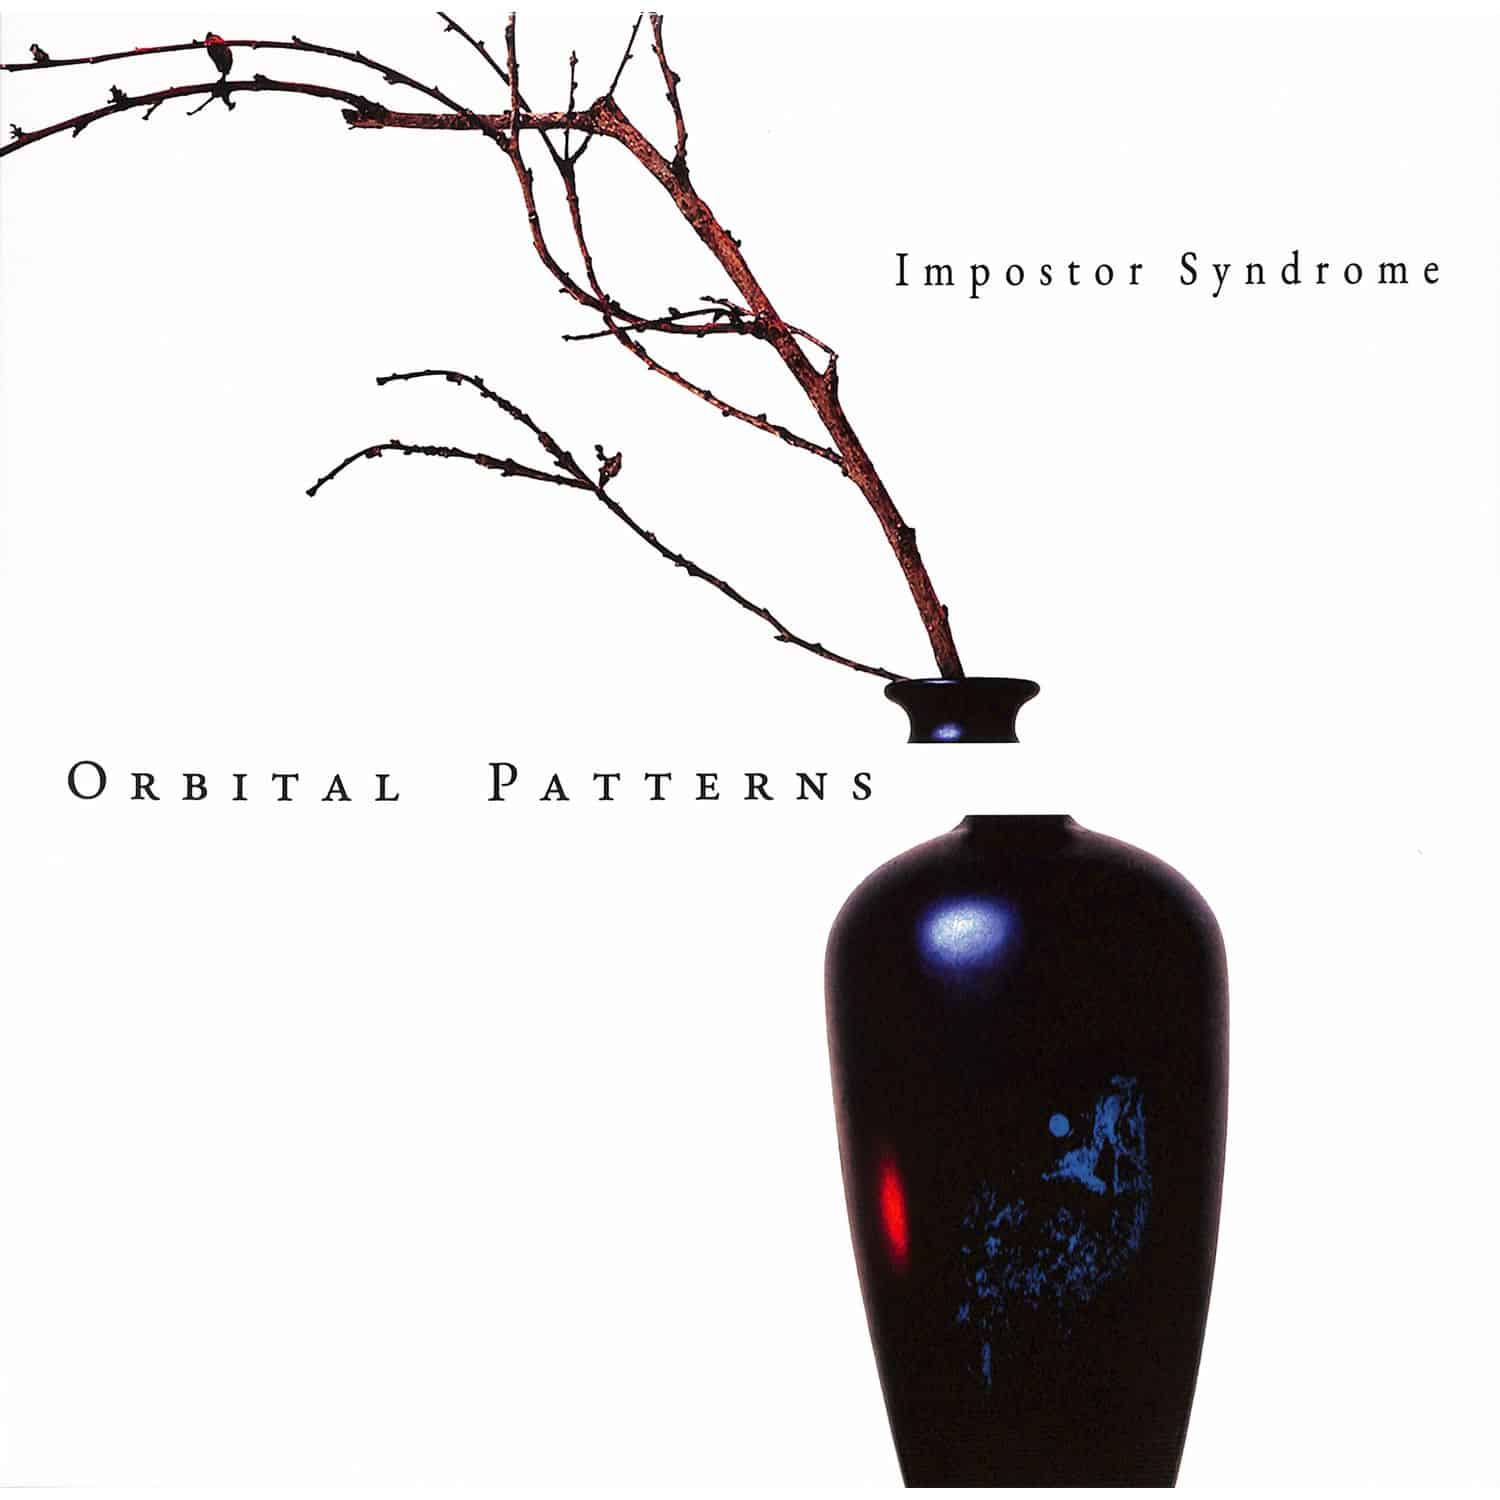 Orbital Patterns - IMPOSTOR SYNDROME